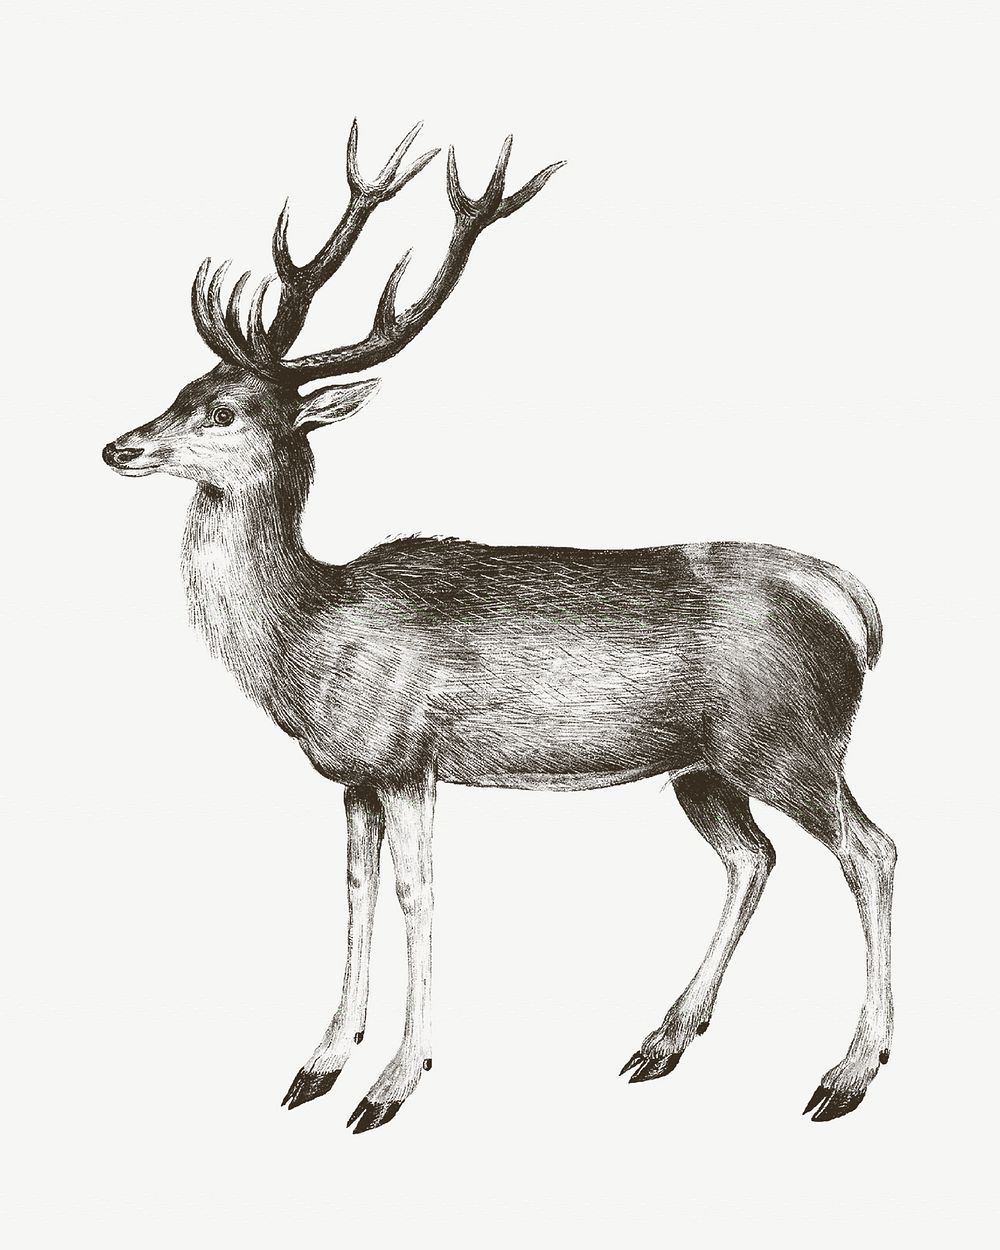 Vintage deer, animal illustration psd. Remixed by rawpixel. 